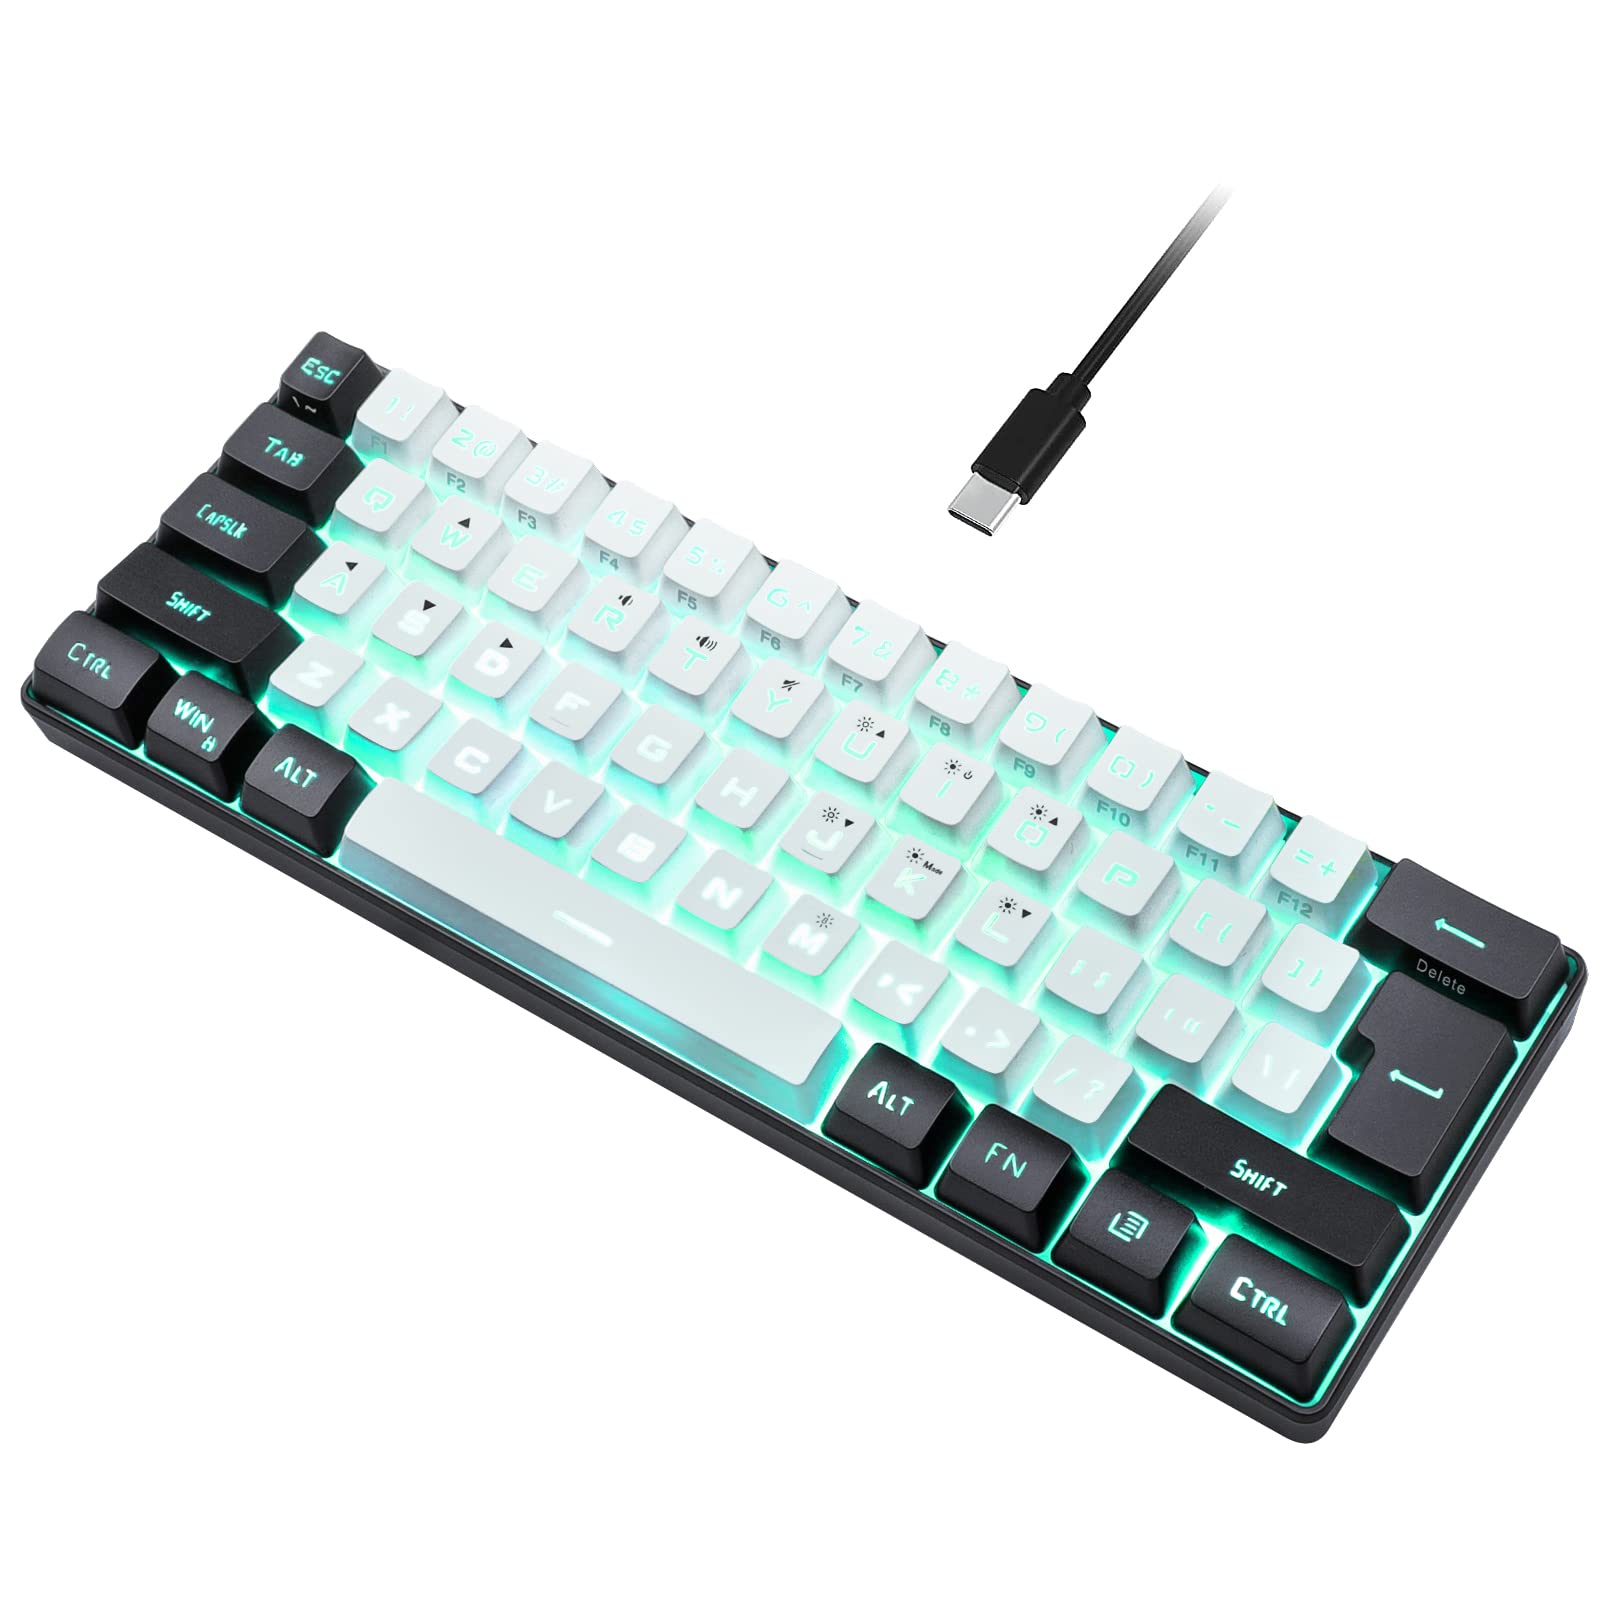 CTBTBESE 60% Wired Gaming Keyboard, RGB Backlit Mechanical Feeling Keyboard, Ultra-Compact Mini Waterproof Keyboard for PC Computer Gamer White and Black (White/Black)